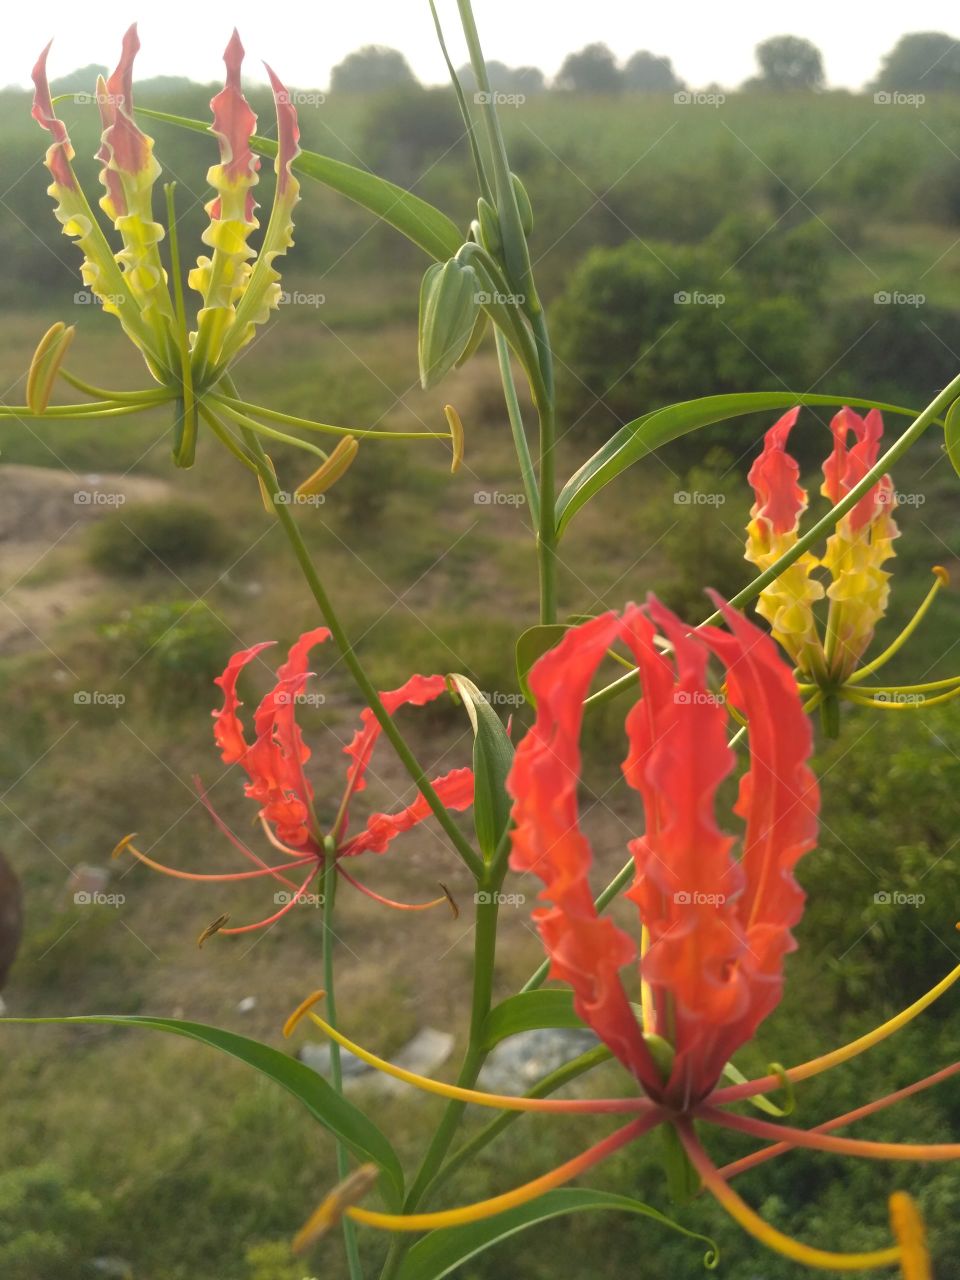 sengandam flowers